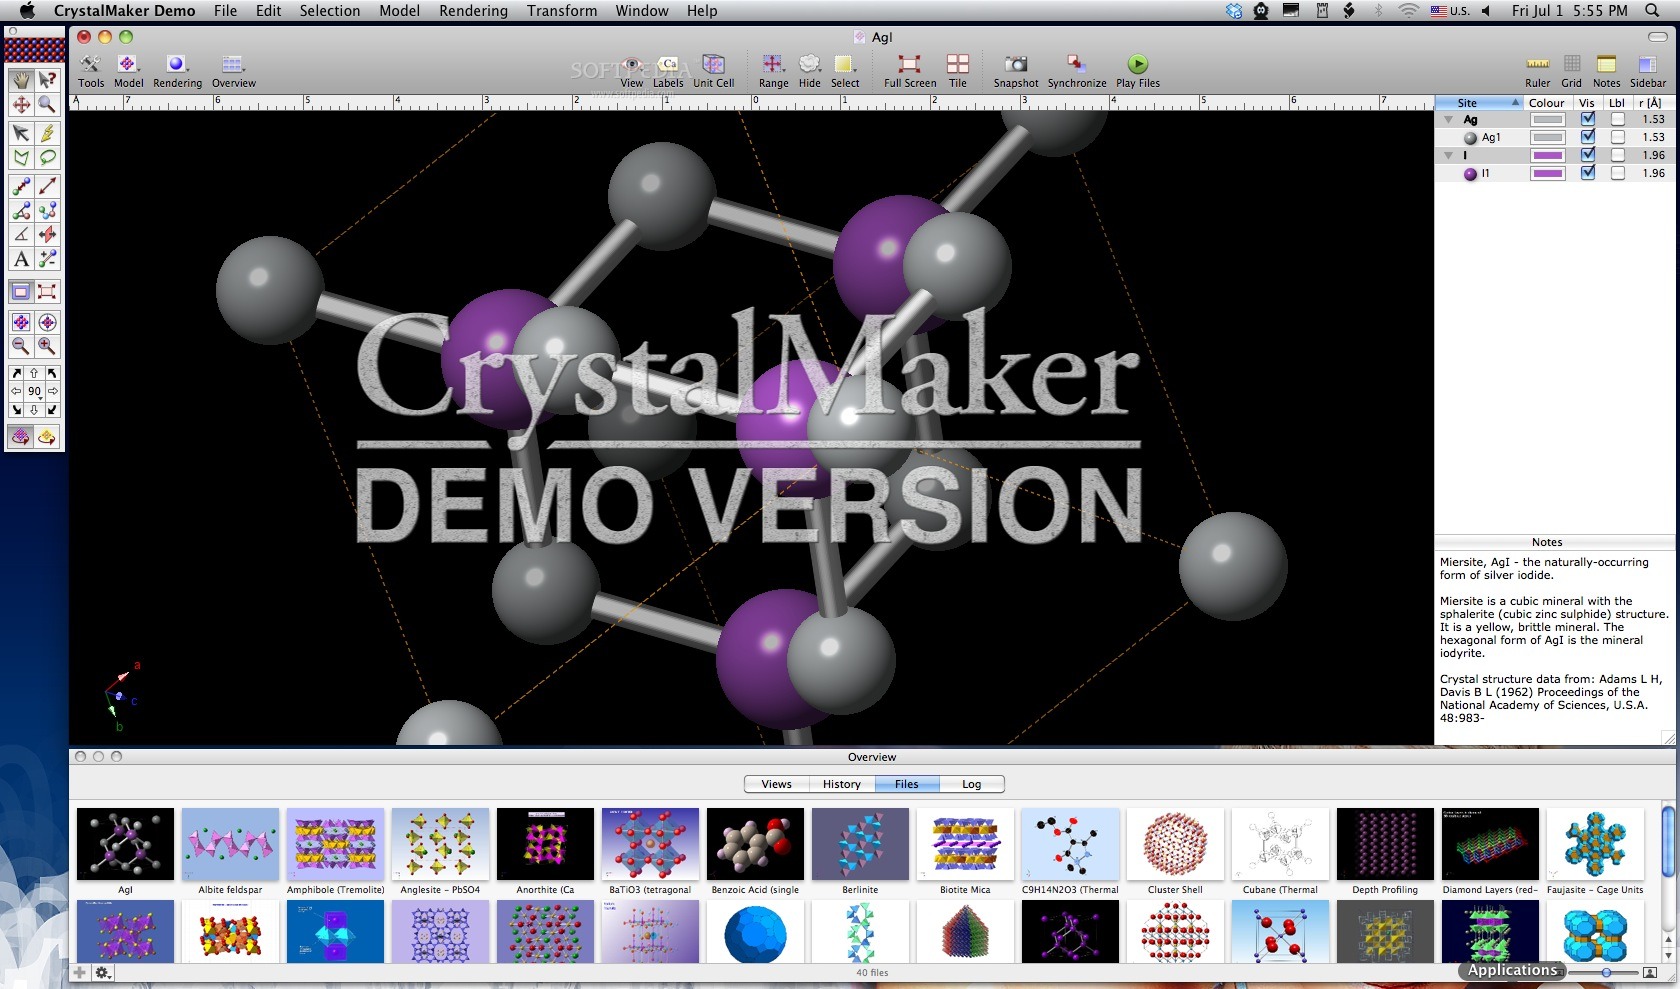 nanoshell crystalmaker